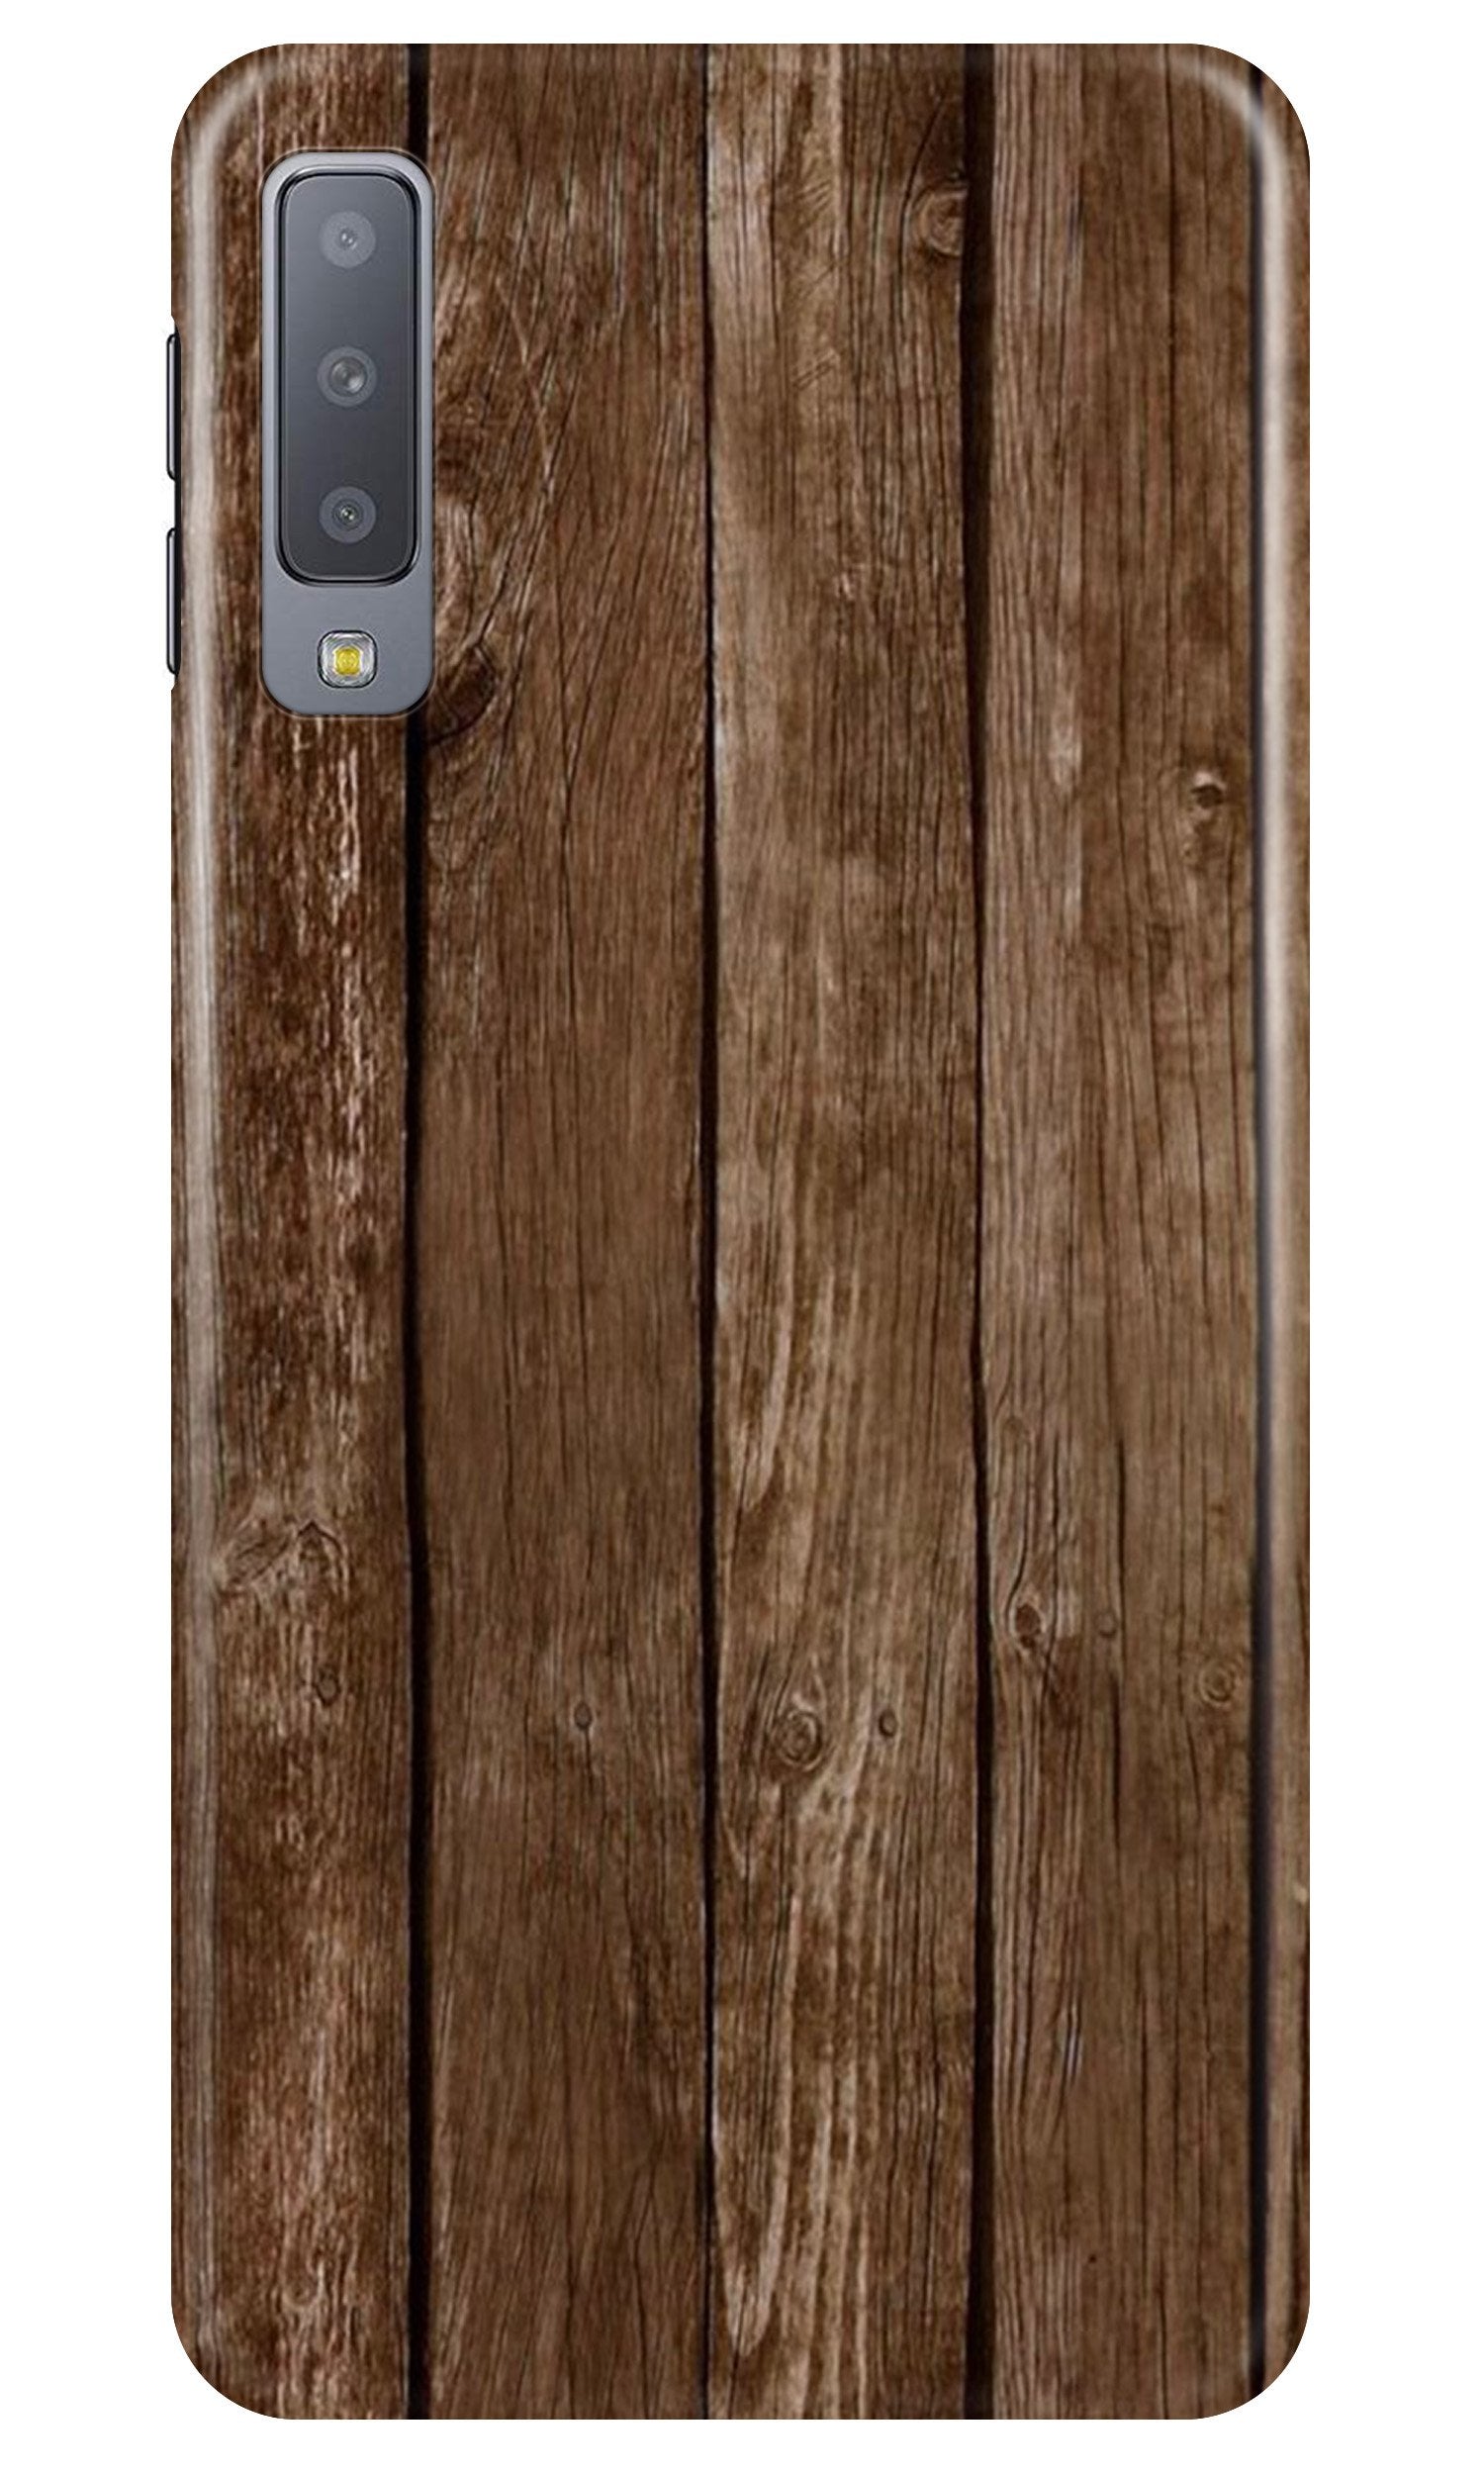 Wooden Look Case for Samung Galaxy A70s  (Design - 112)